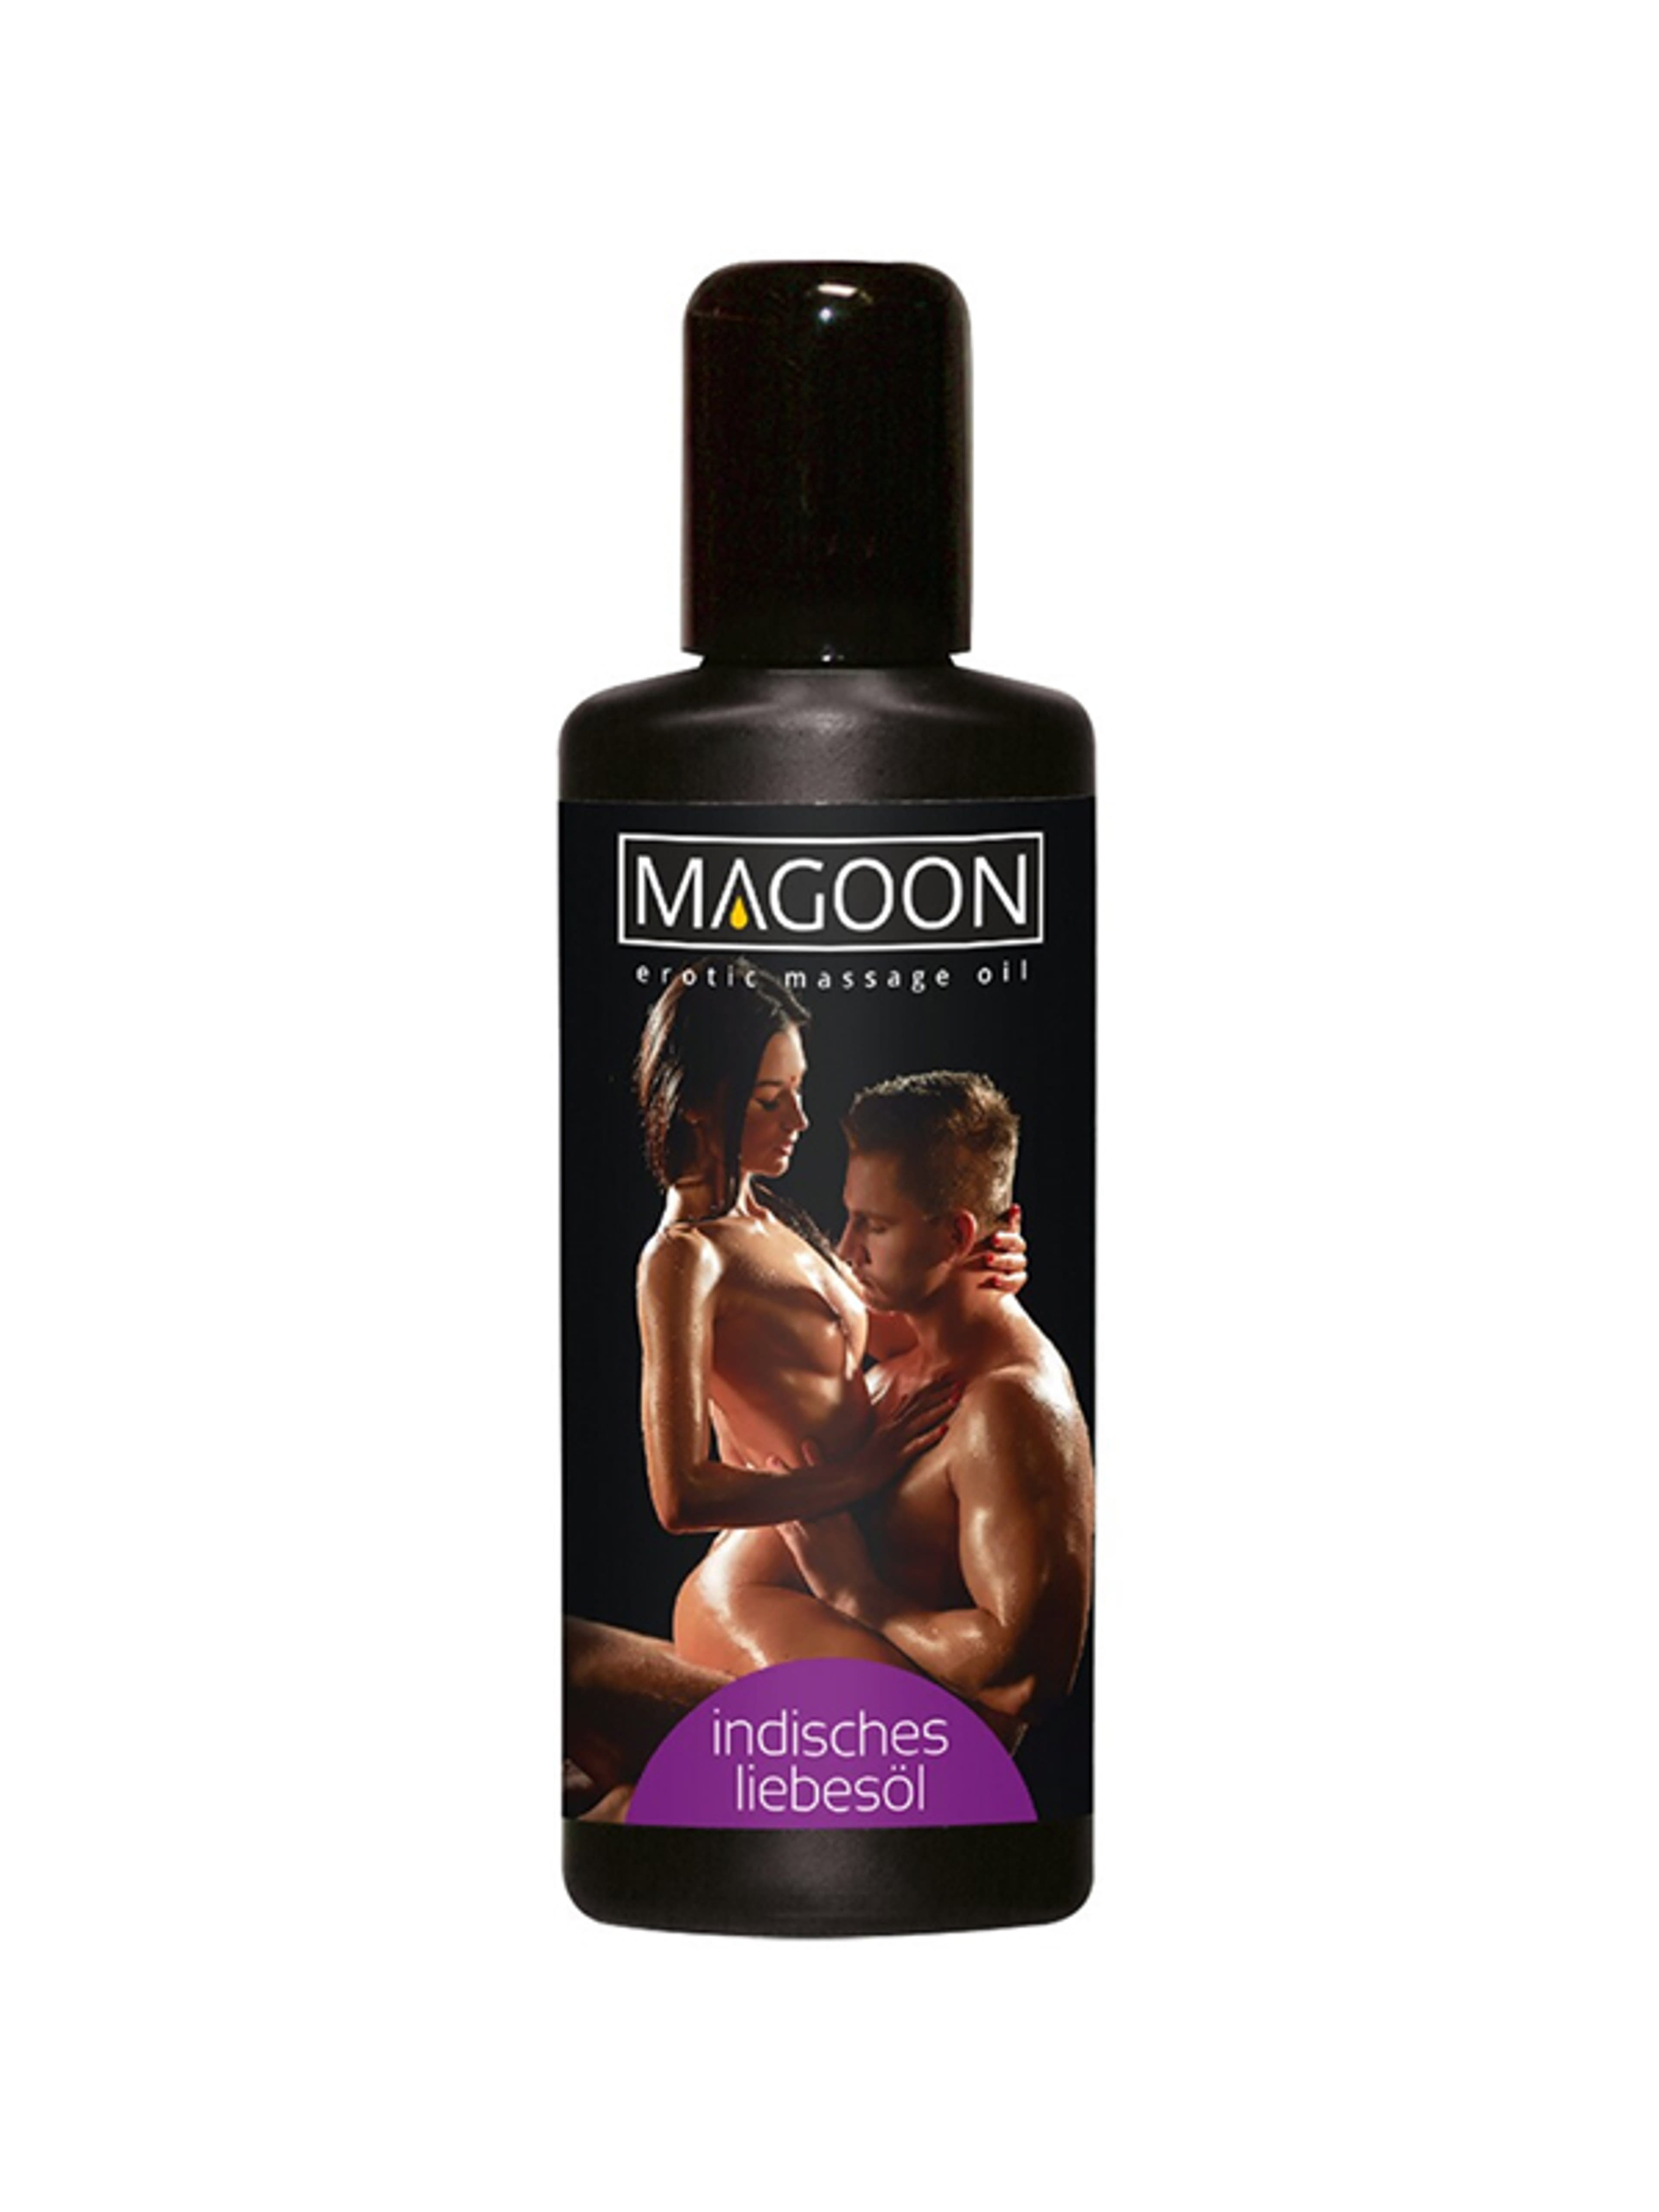 Magoon indiai szerelemolaj - 50 ml